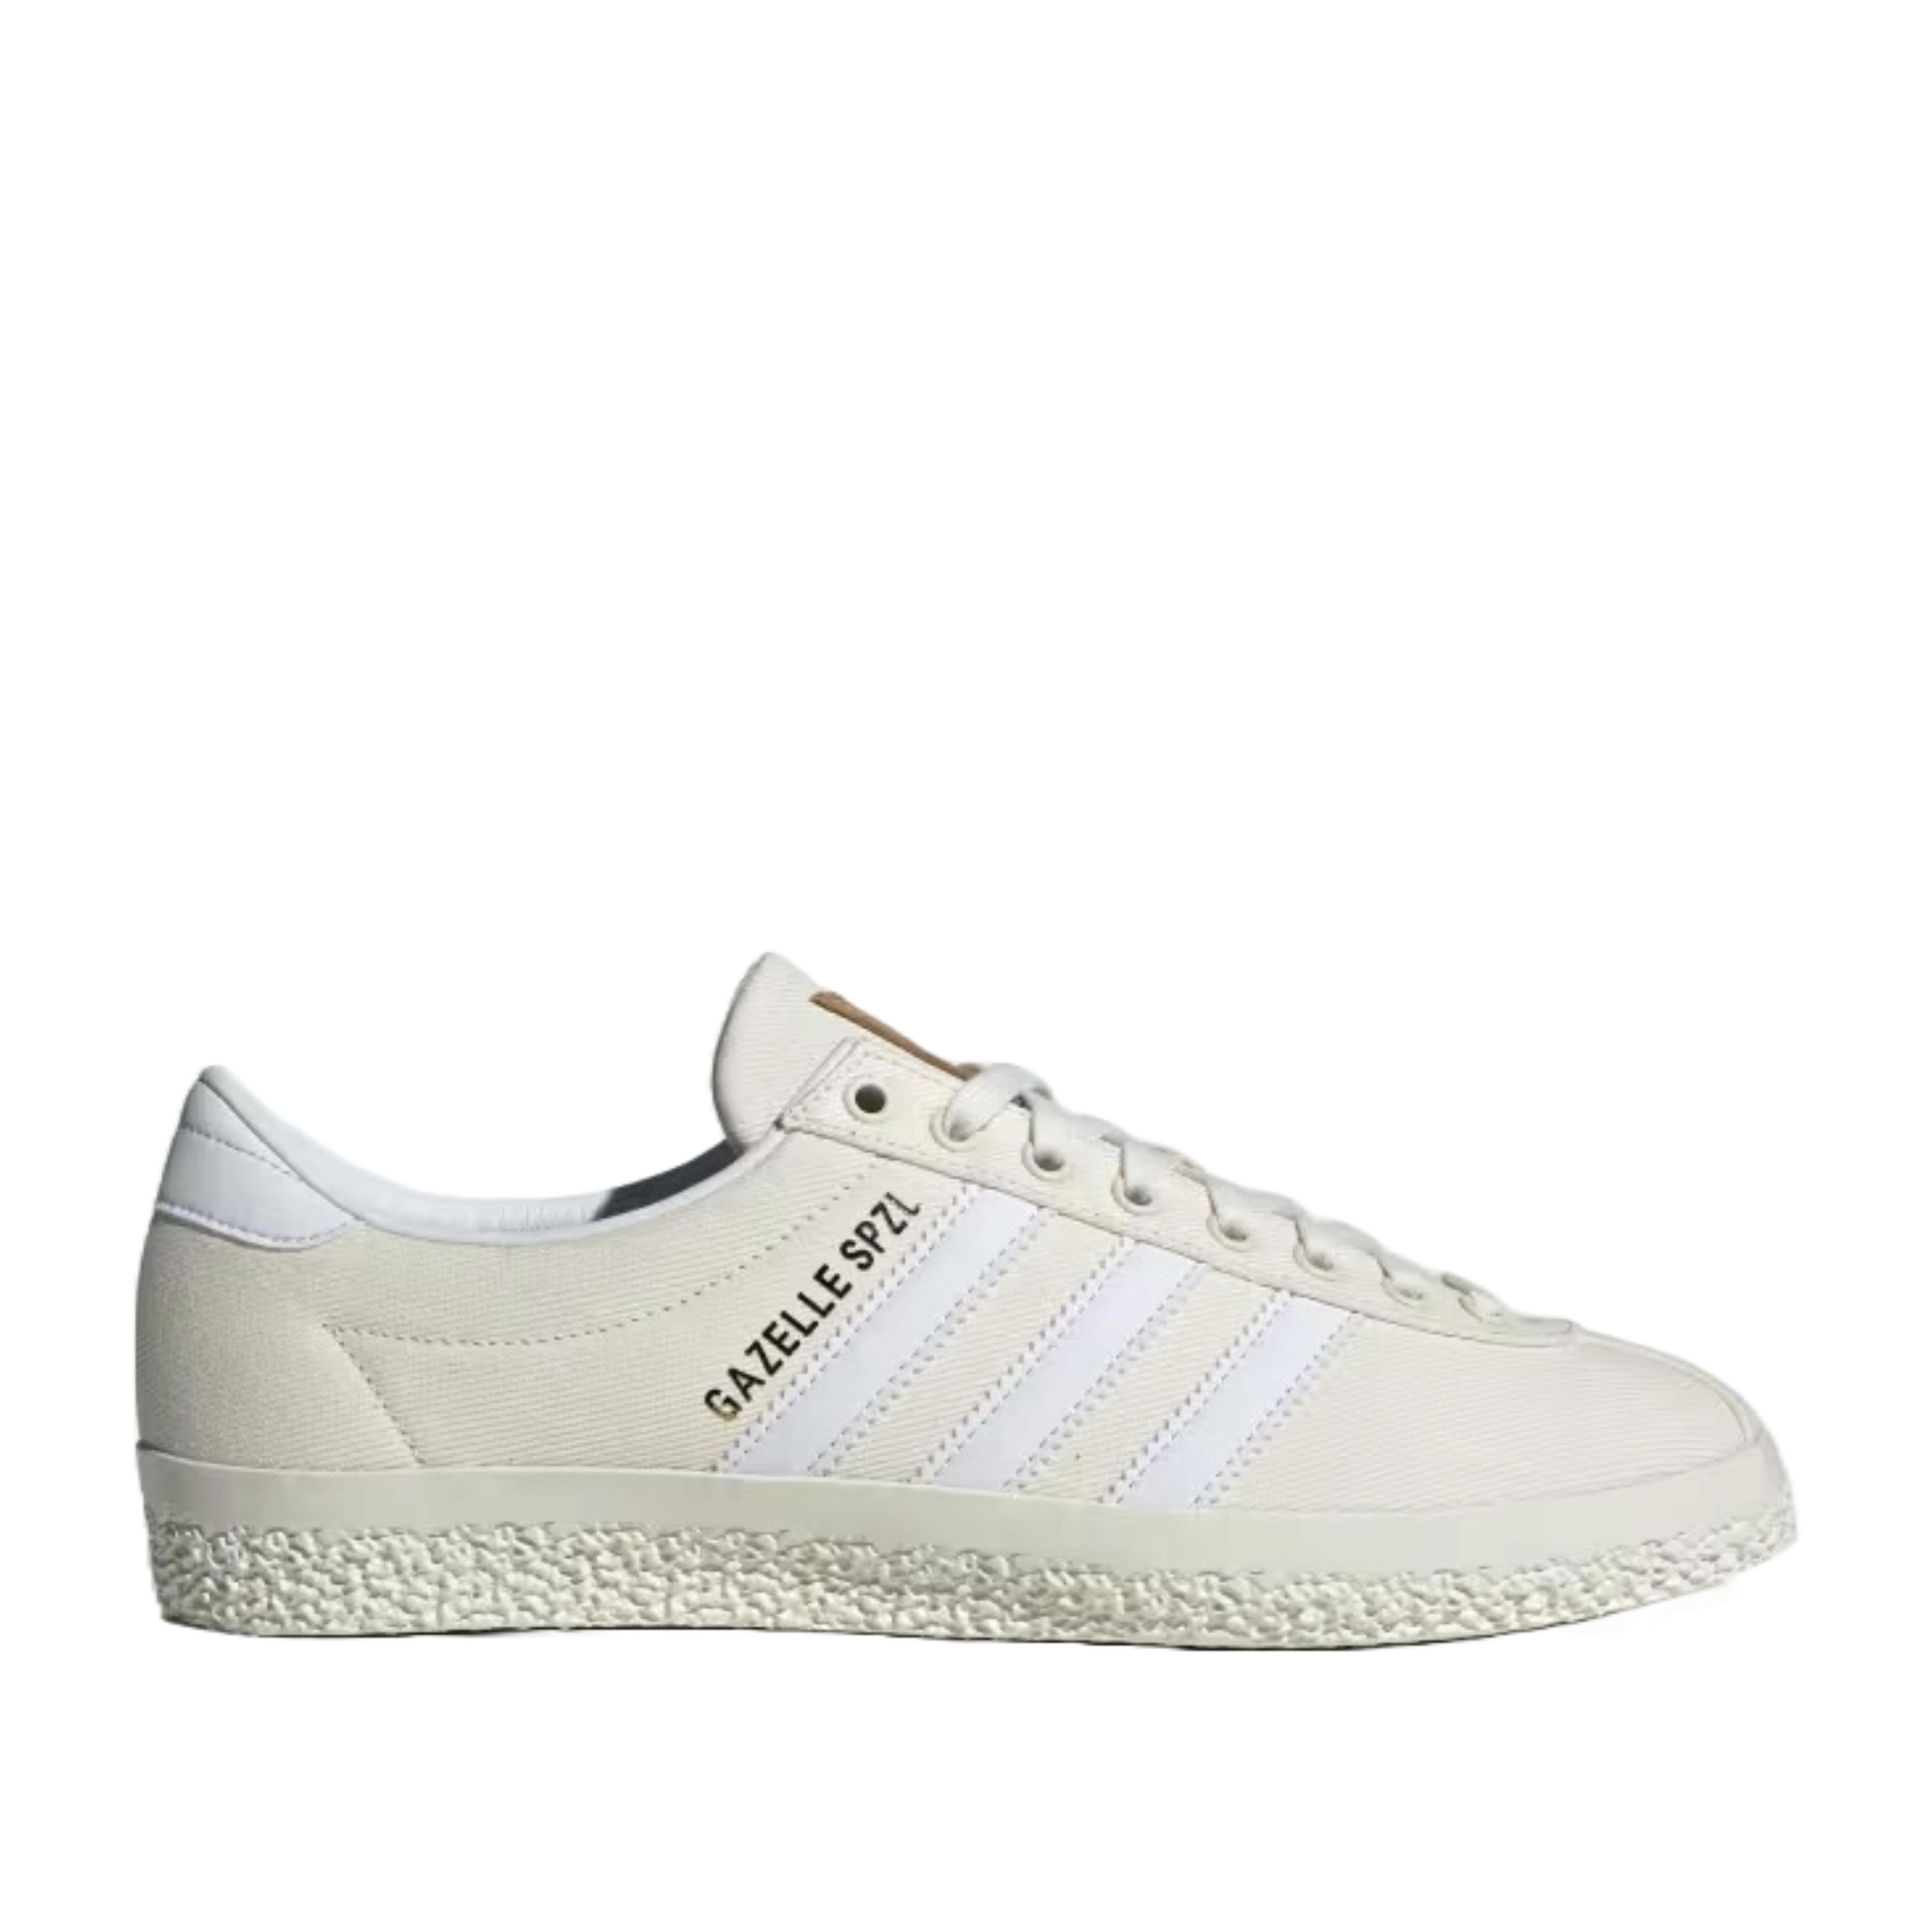 Adidas - Gazelle SPZL Shoes - (Chalk White / Cloud White / Off White) by ADIDAS